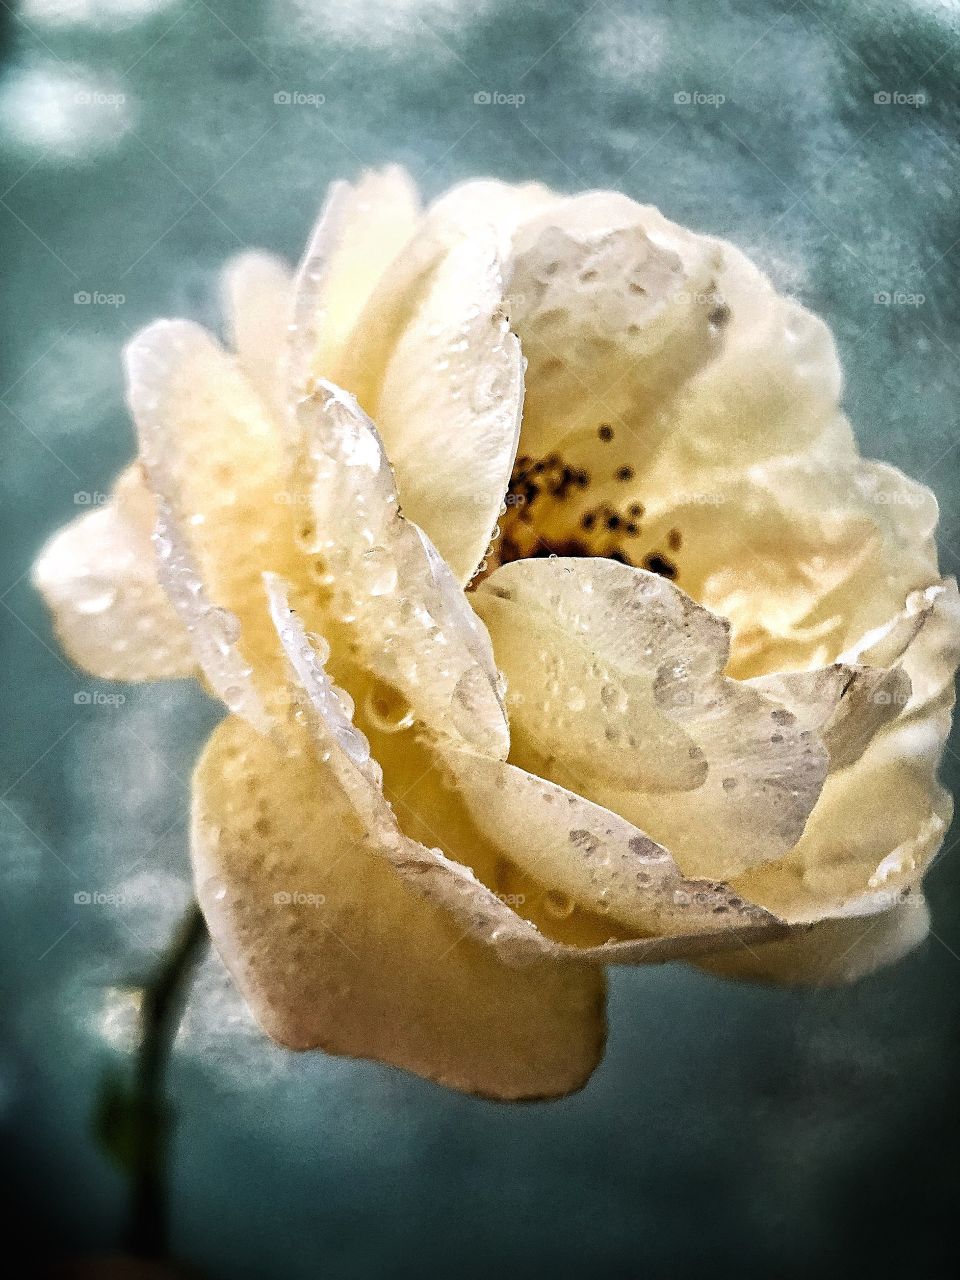 A cream rose on a rainy day